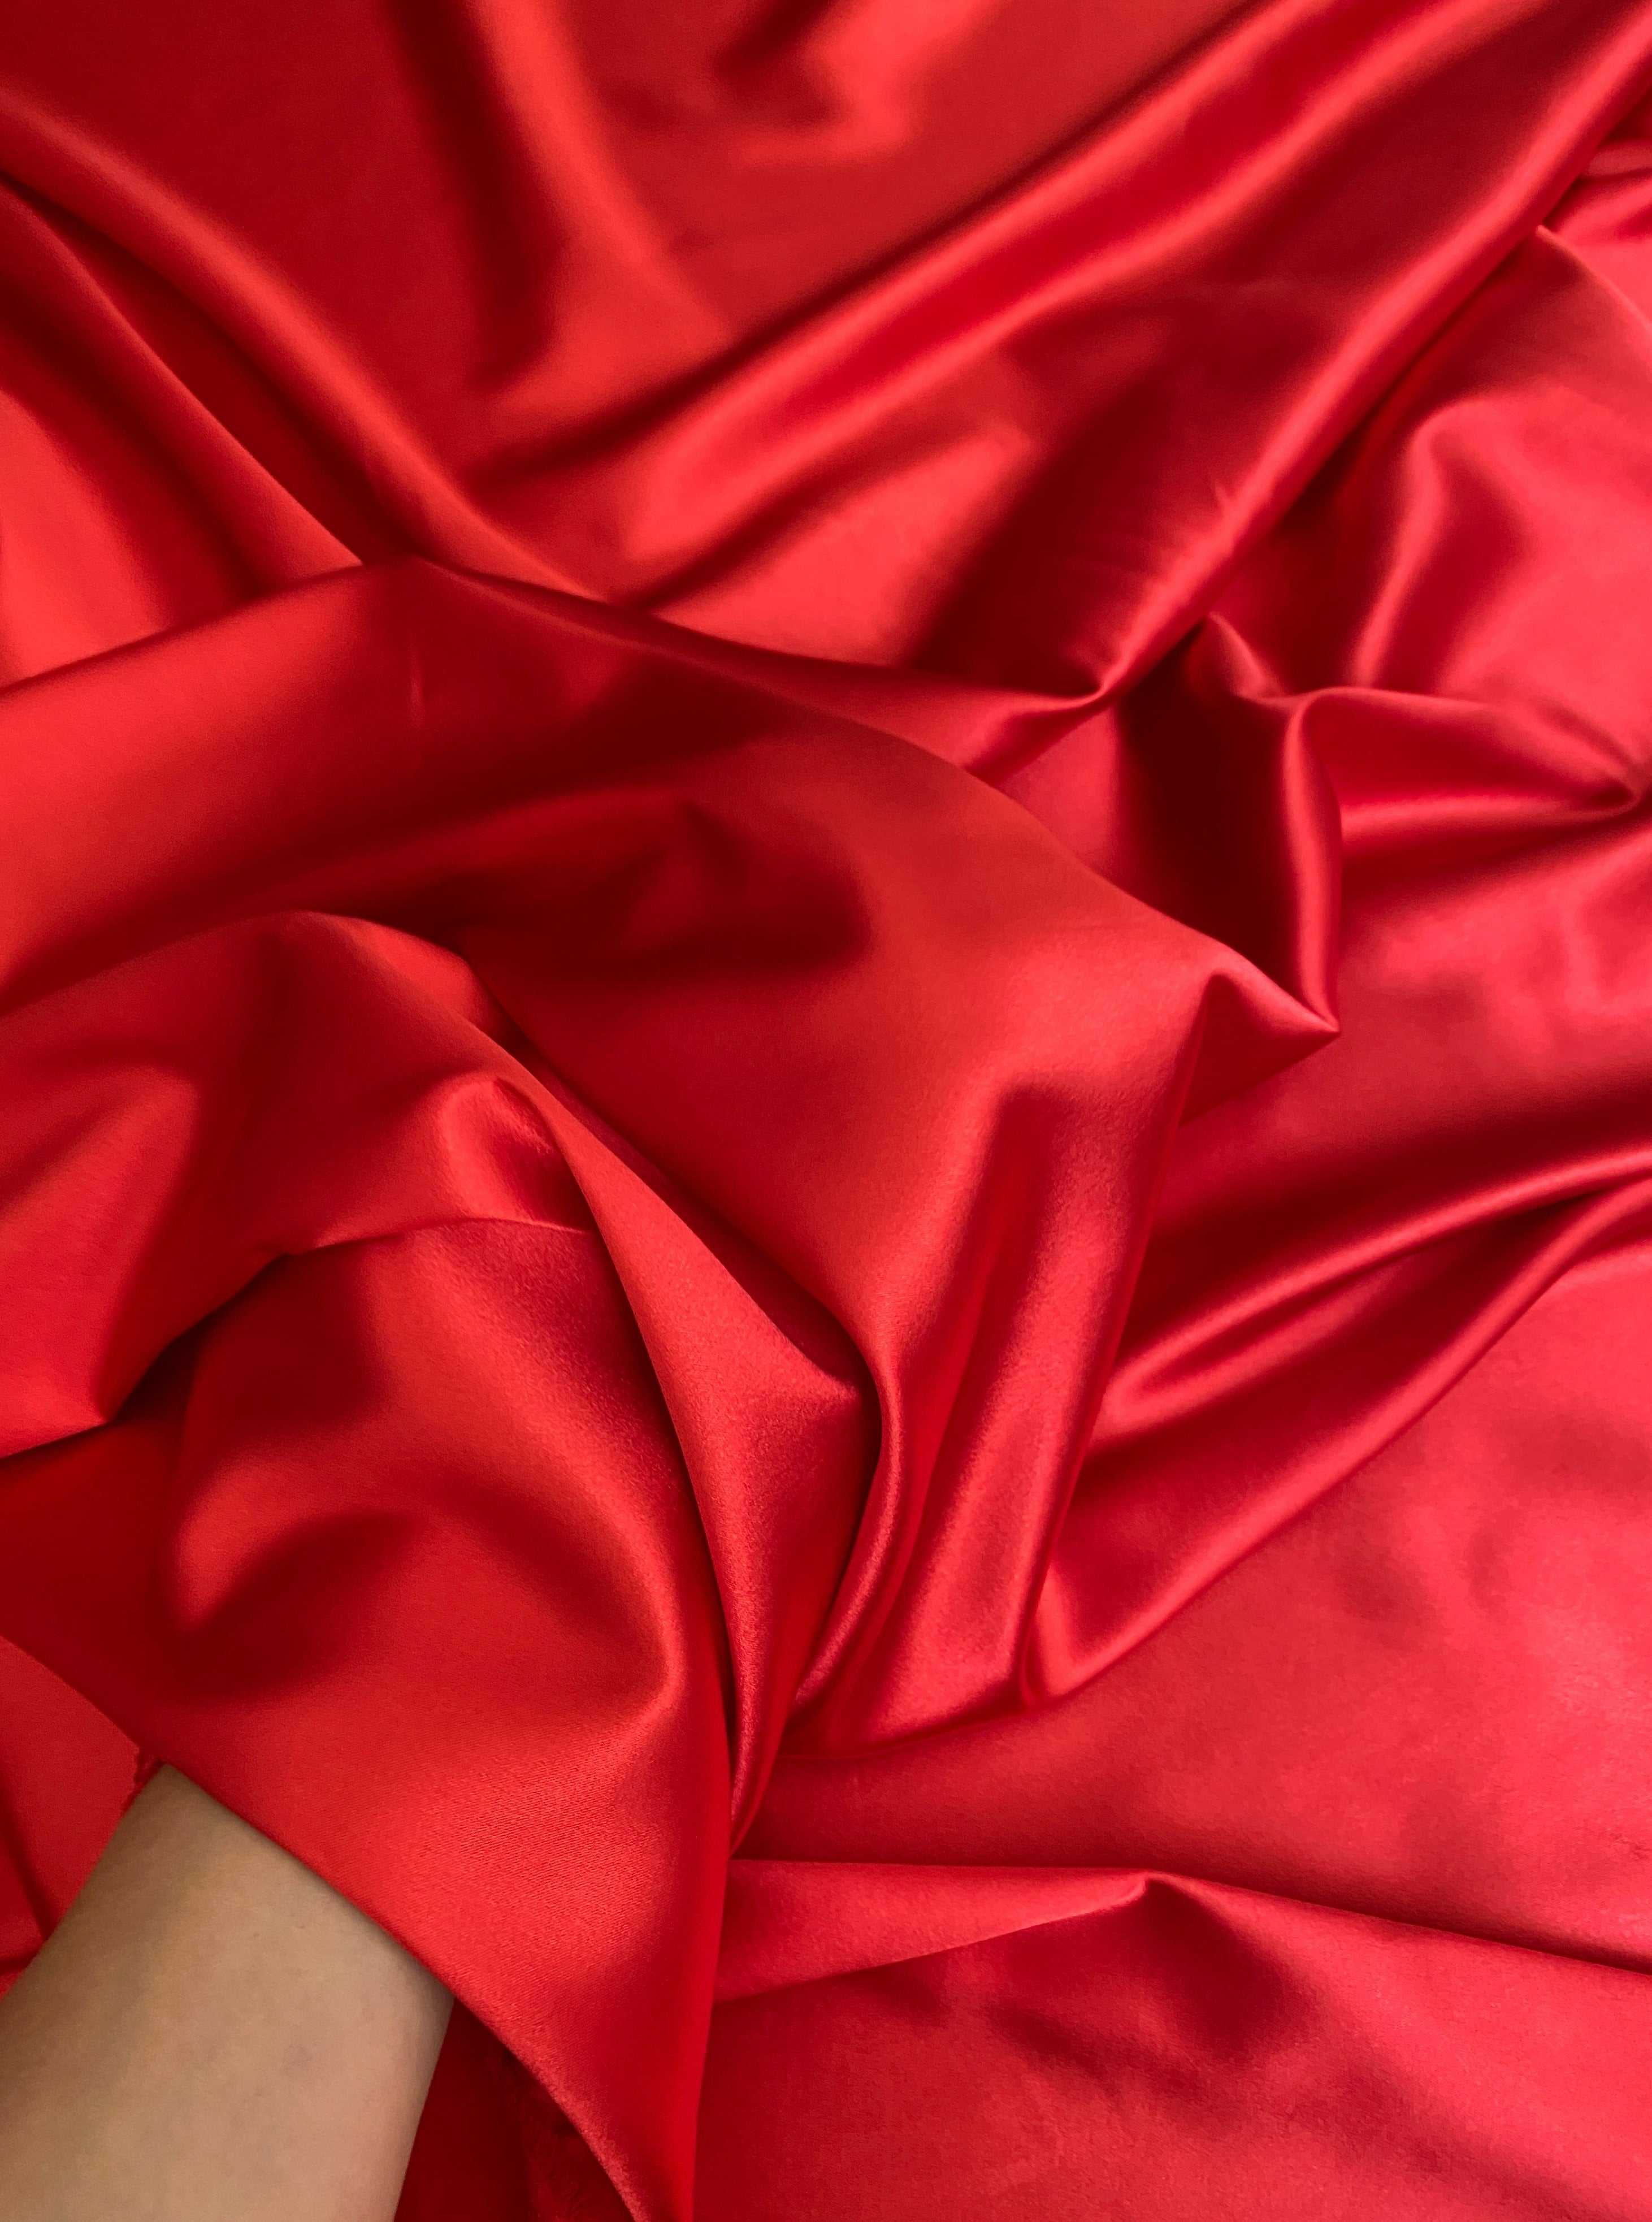 Flame red diamond bright silk imitation acetate satin fabric Draping silky  trousers shirt Konishi clothing fabric